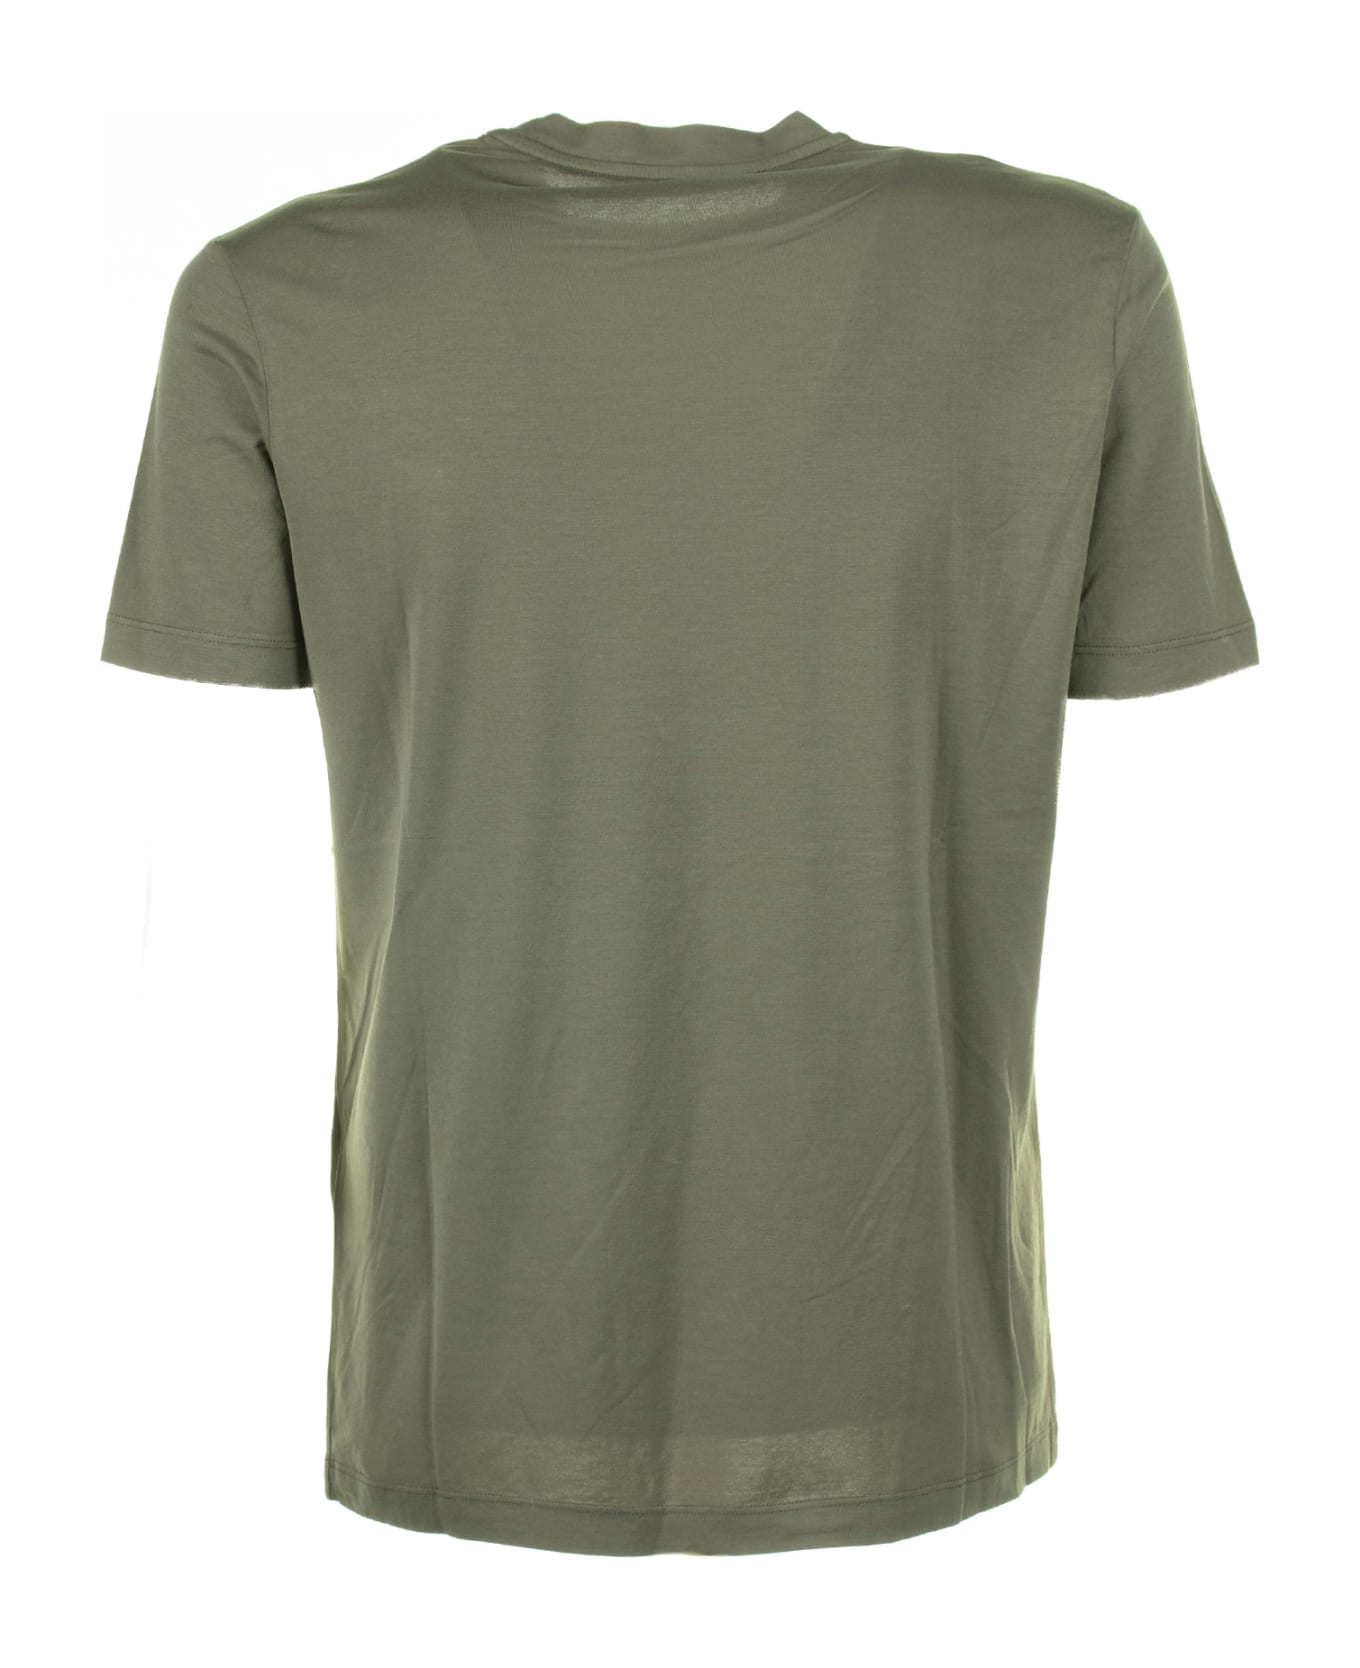 Altea Military Green Cotton T-shirt - MILITARE